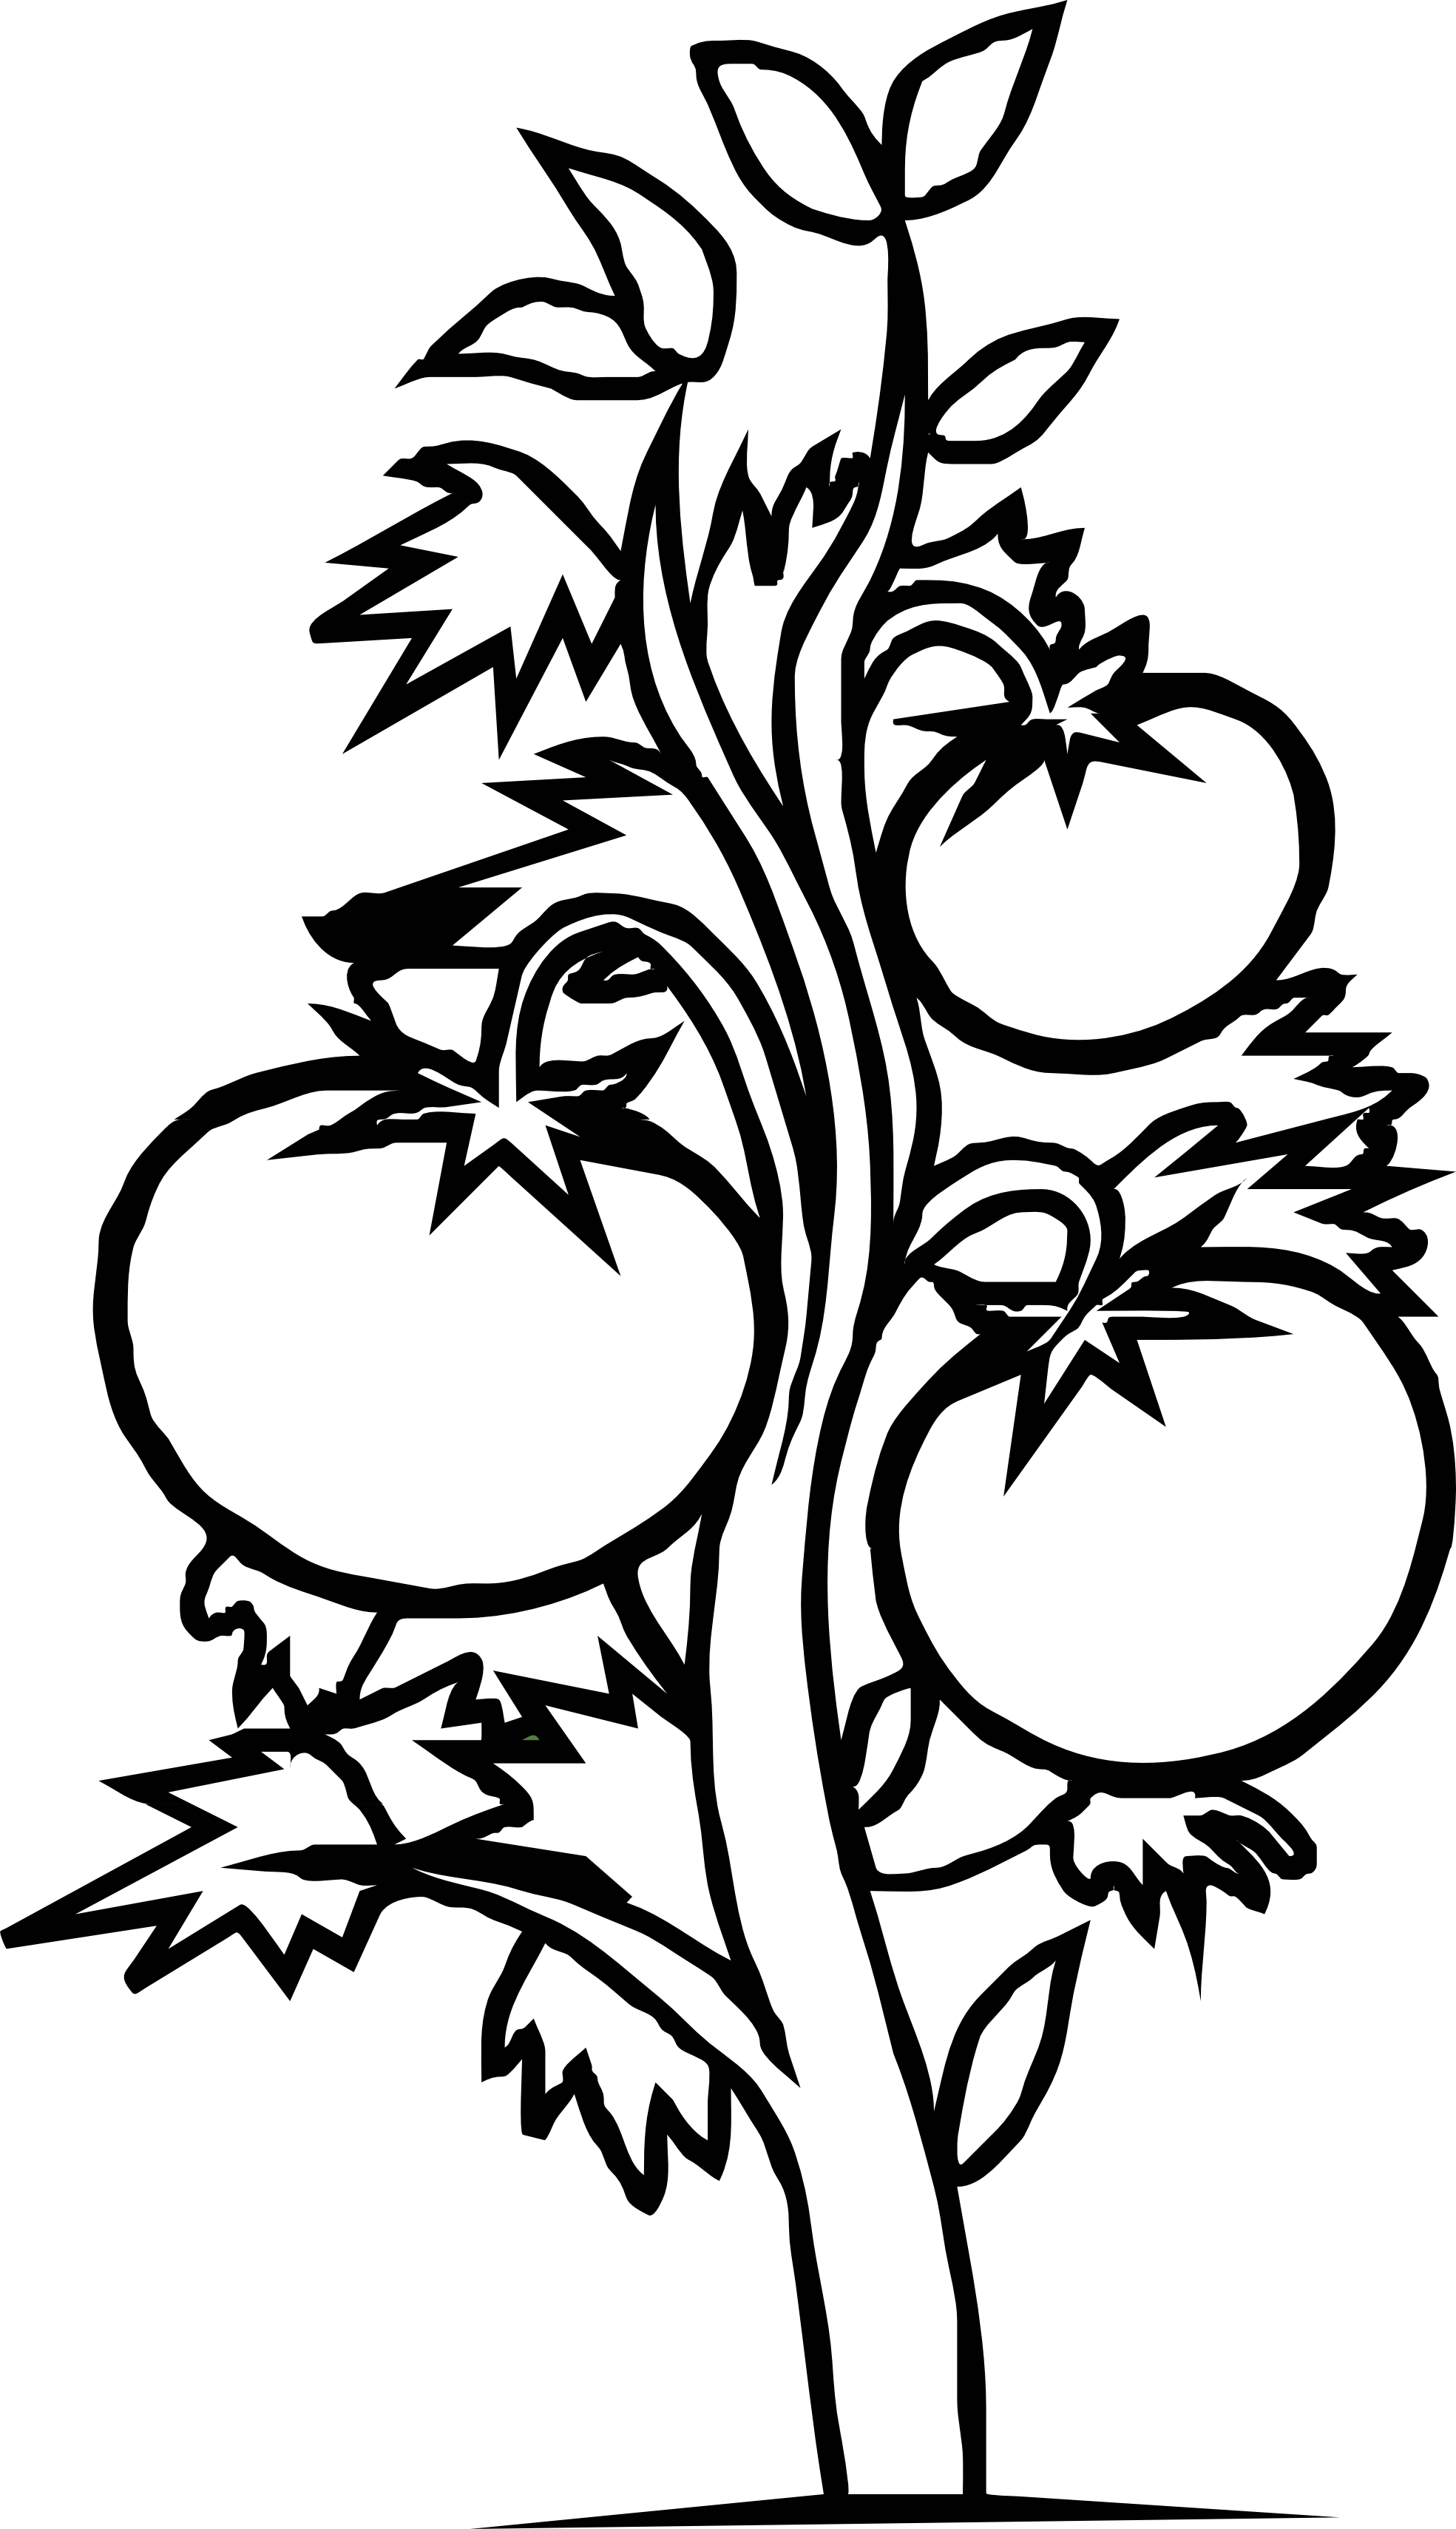 tomato plant black white | Clipart Panda - Free Clipart Images